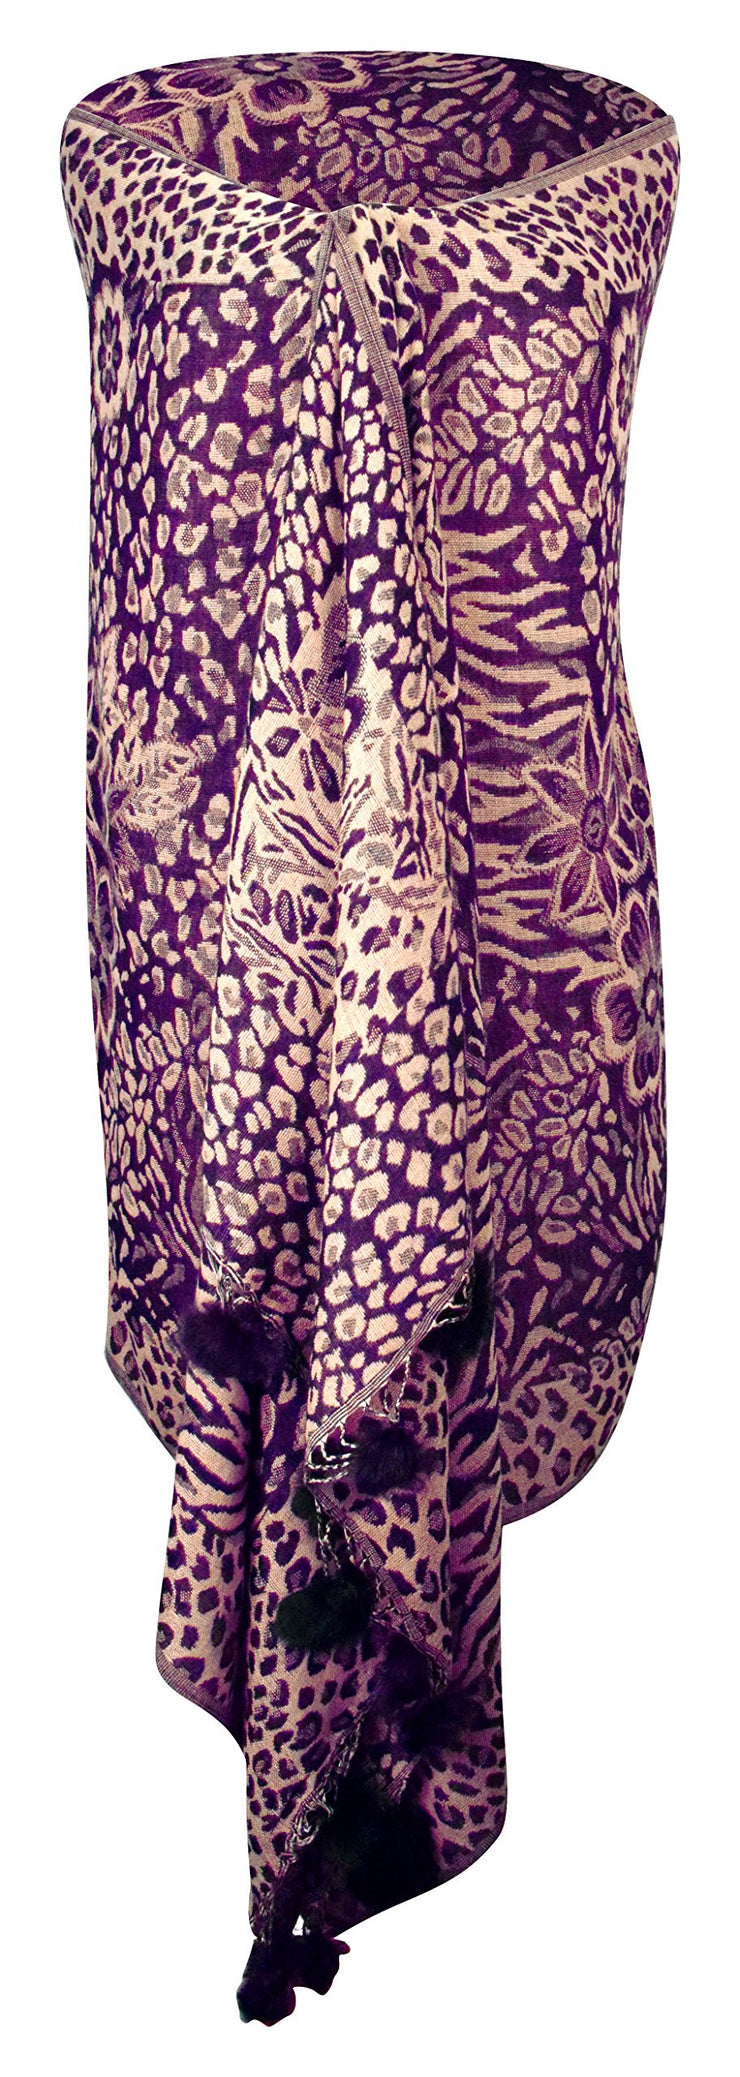 Purple Women's Retro Style Warm Floral Animal Print Pashmina Scarf with Faux Fur Poms